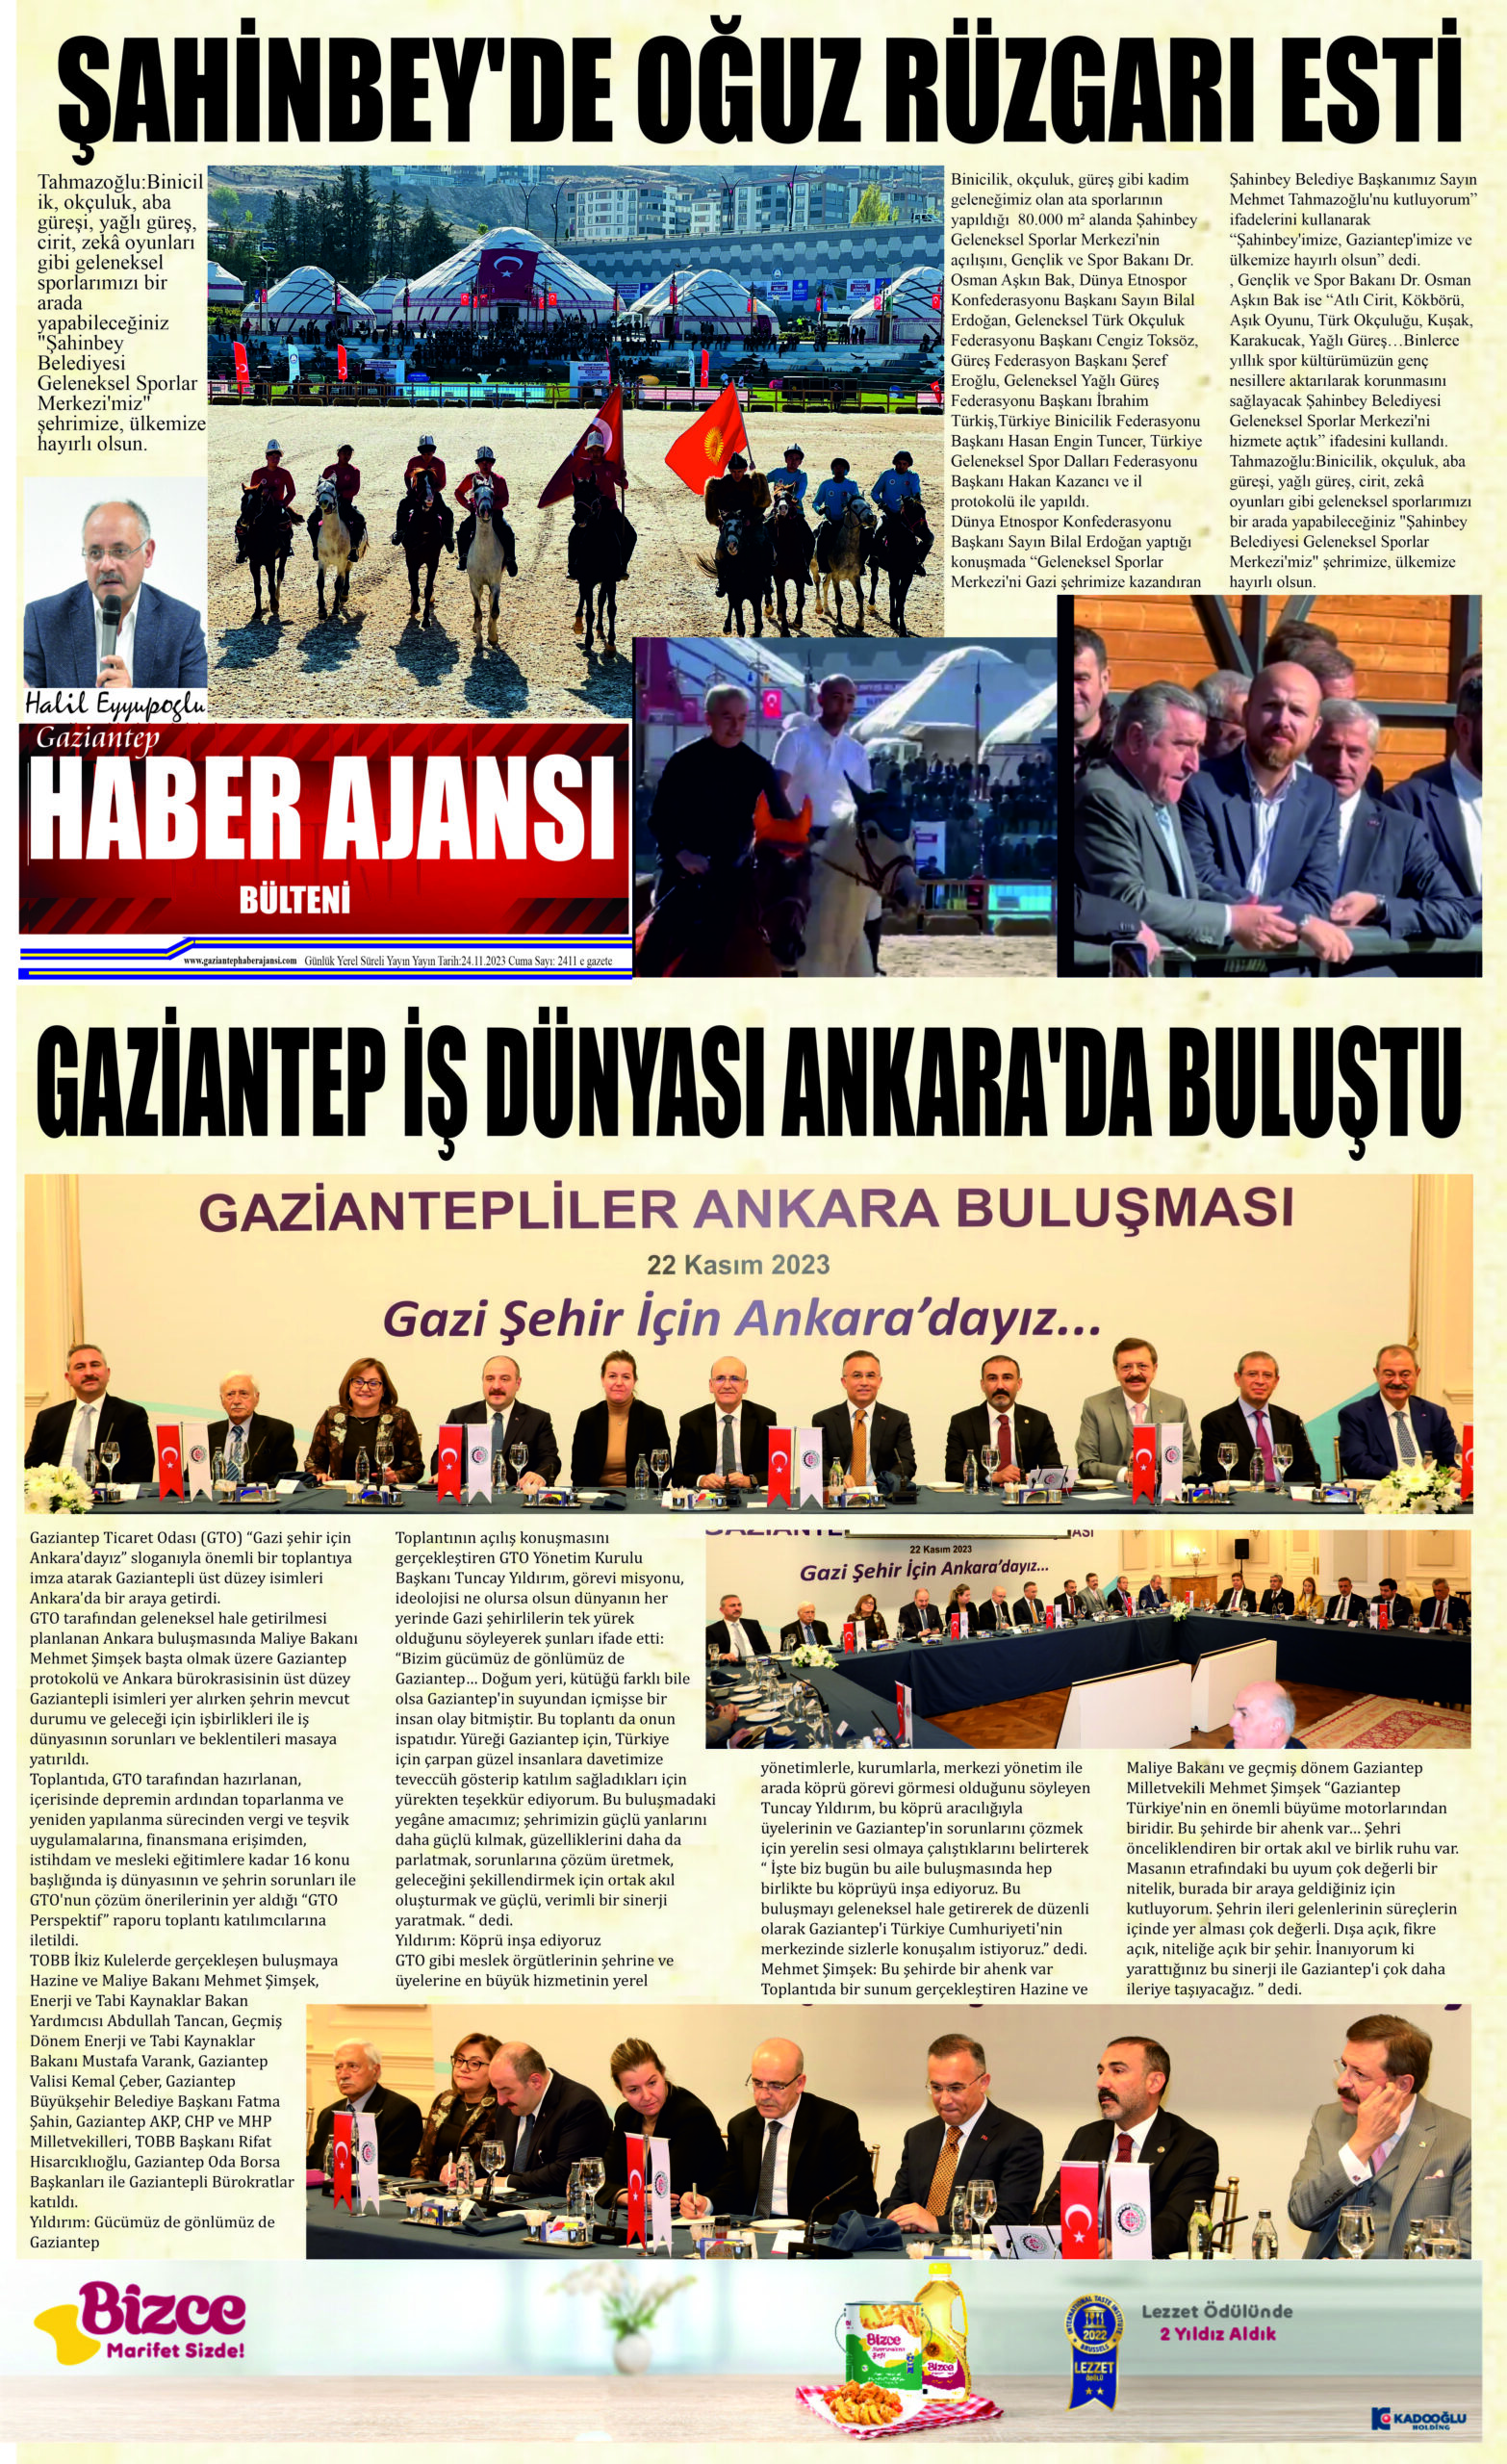 Gaziantep Haber Ajansı Bülteni Cuma 24.11.2023 e gazete